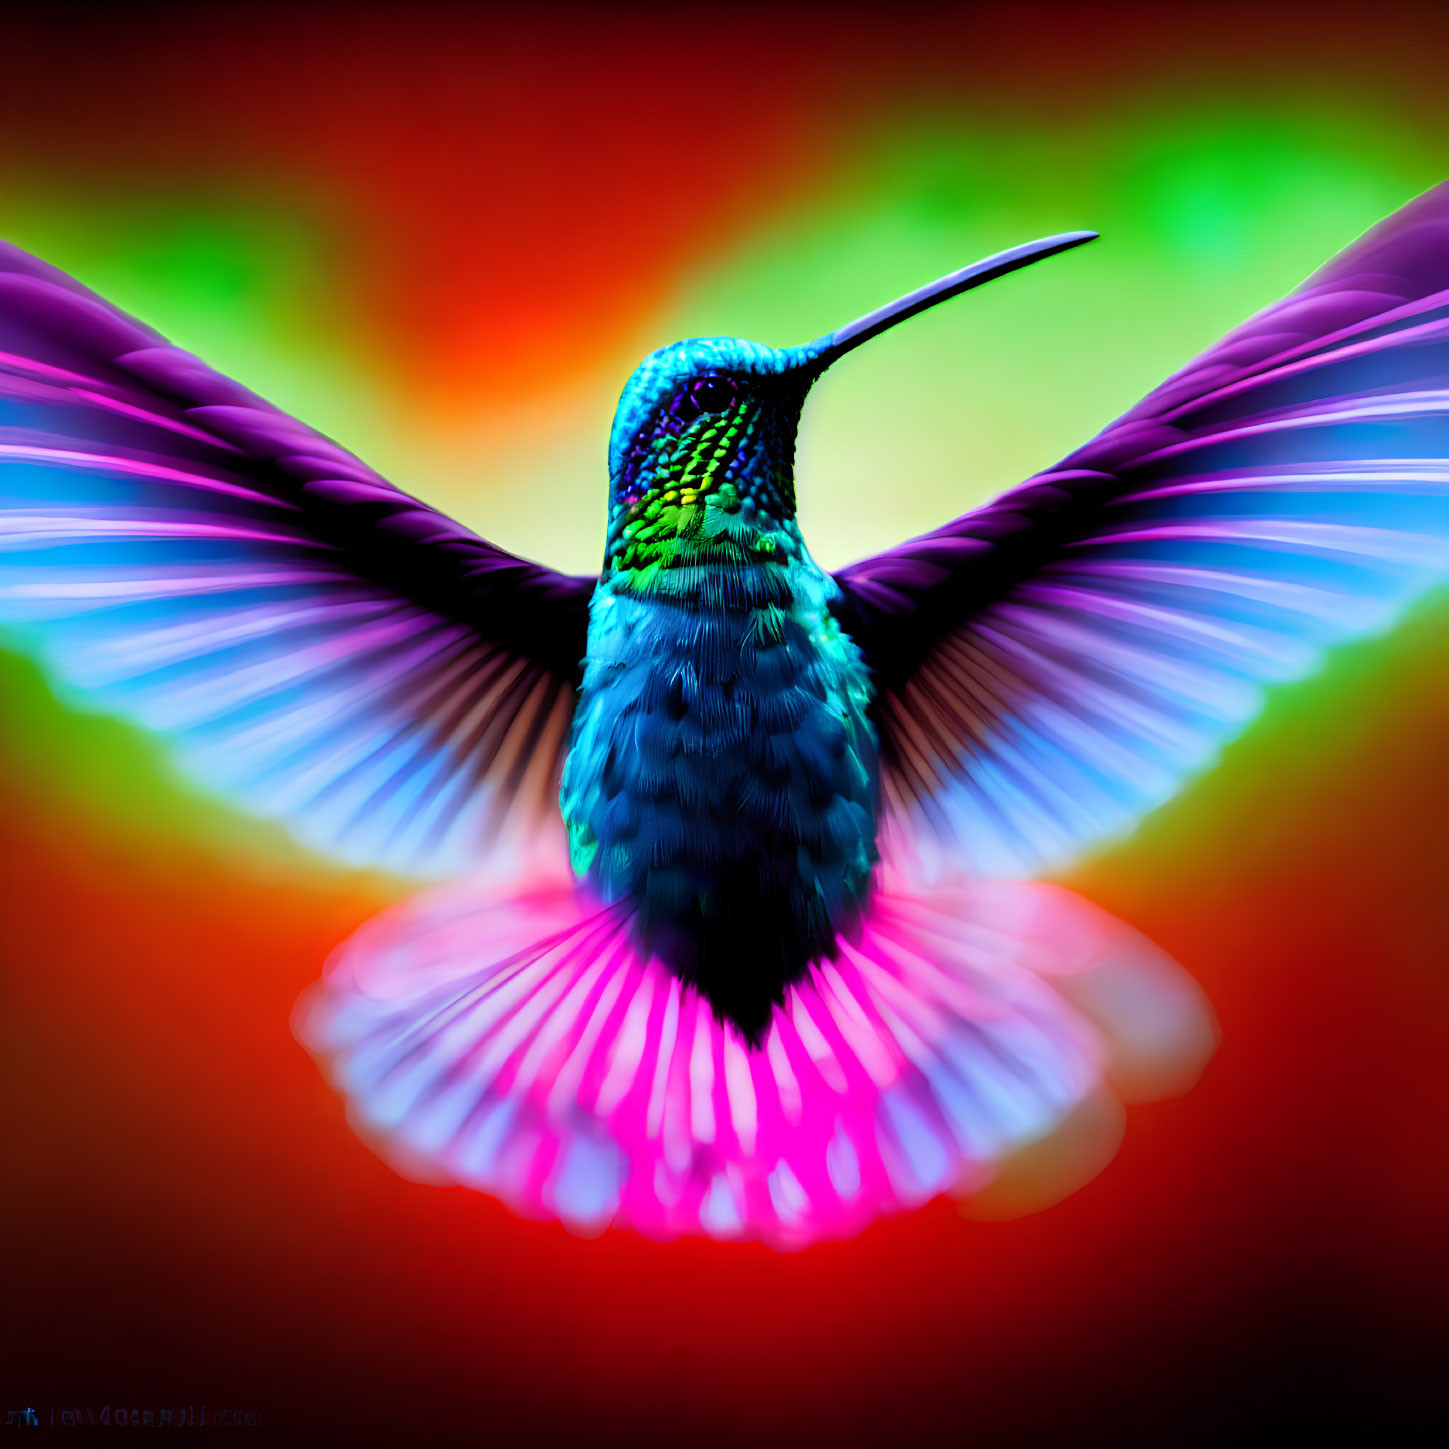 Colorful hummingbird in mid-flight against rainbow background